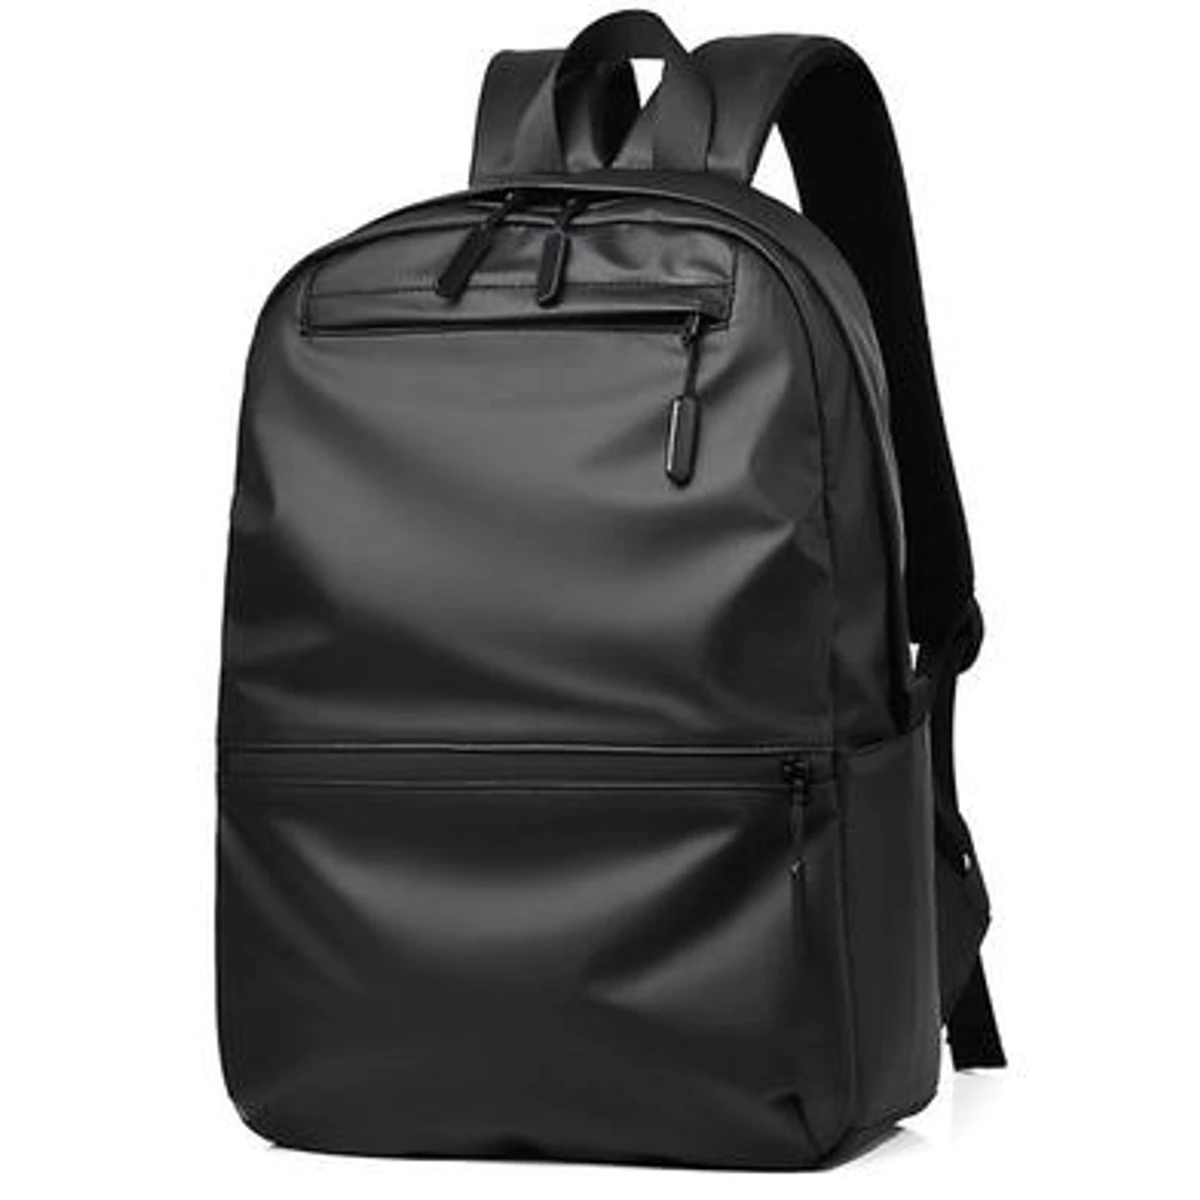 Backpack For Men School Bag College Bag Laptop Backpack Waterproof Travel Bag With Wallet